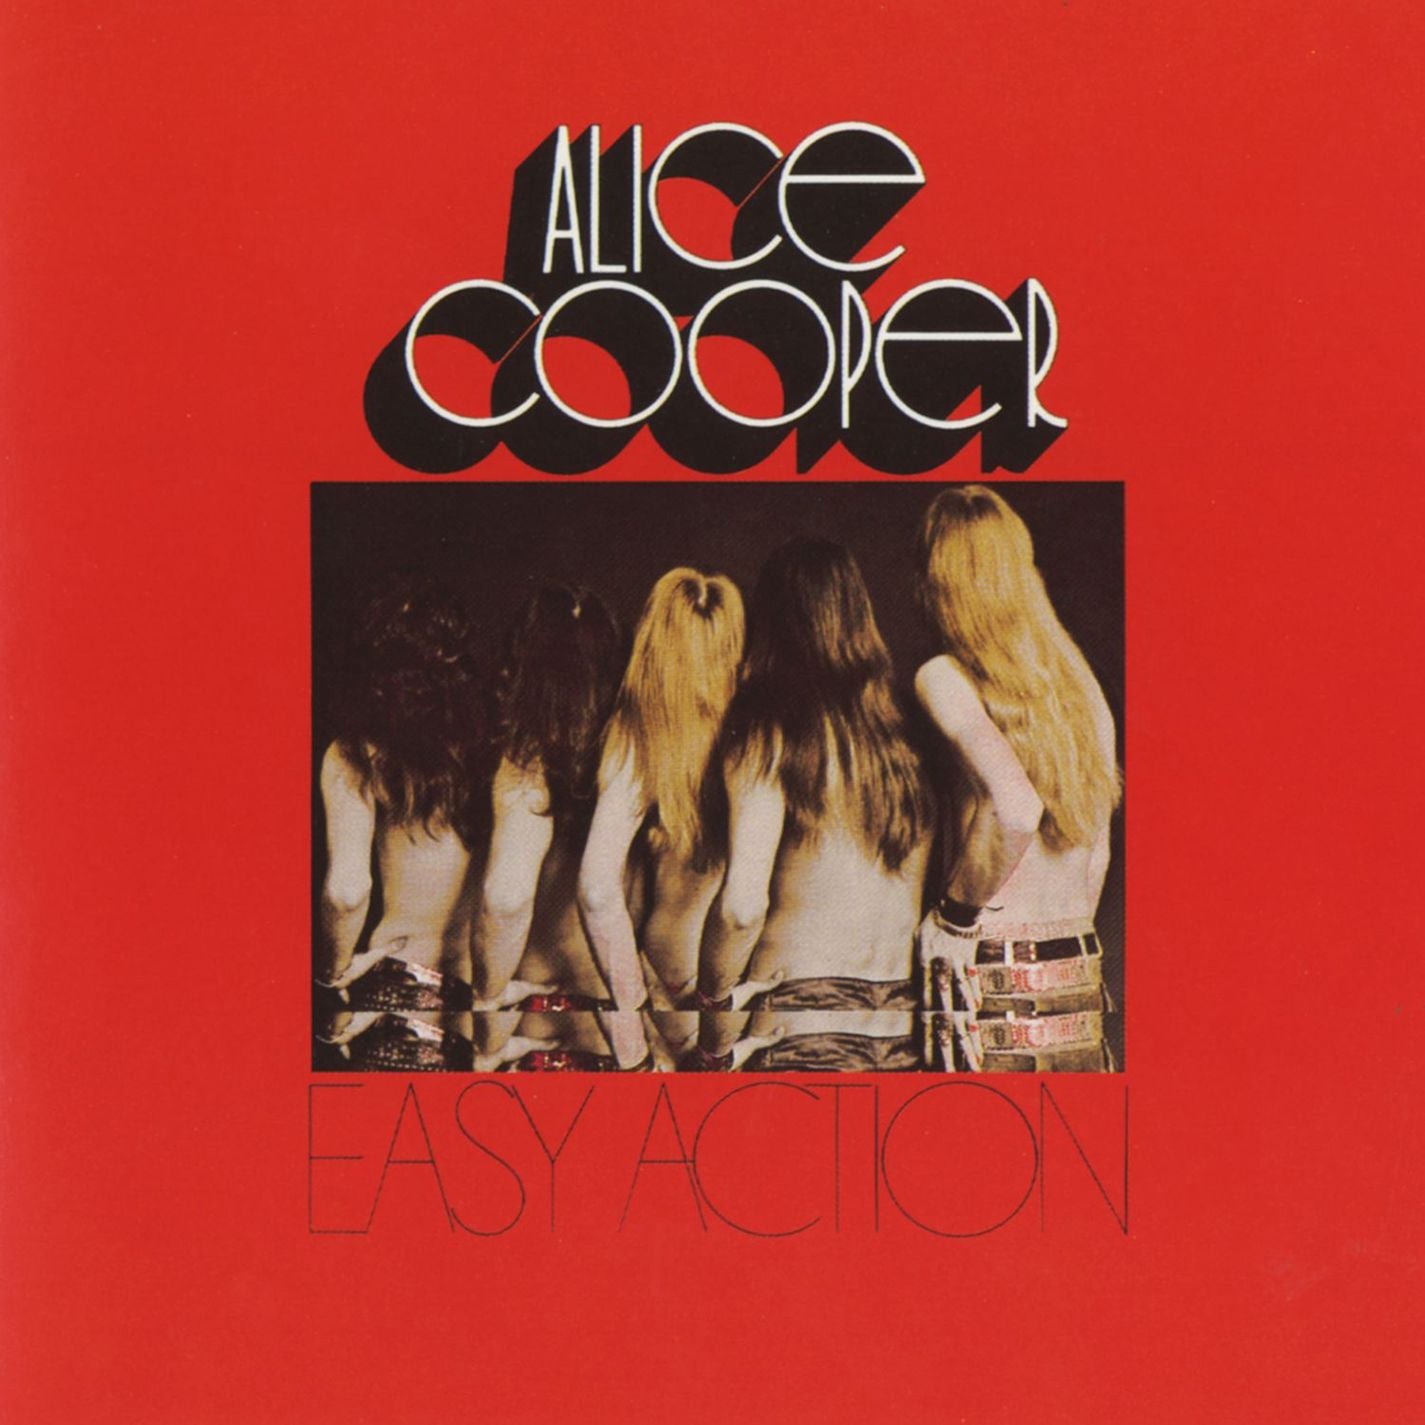 Alice Cooper - Easy Action [Gold Vinyl][RSC 2018 Exclusive]